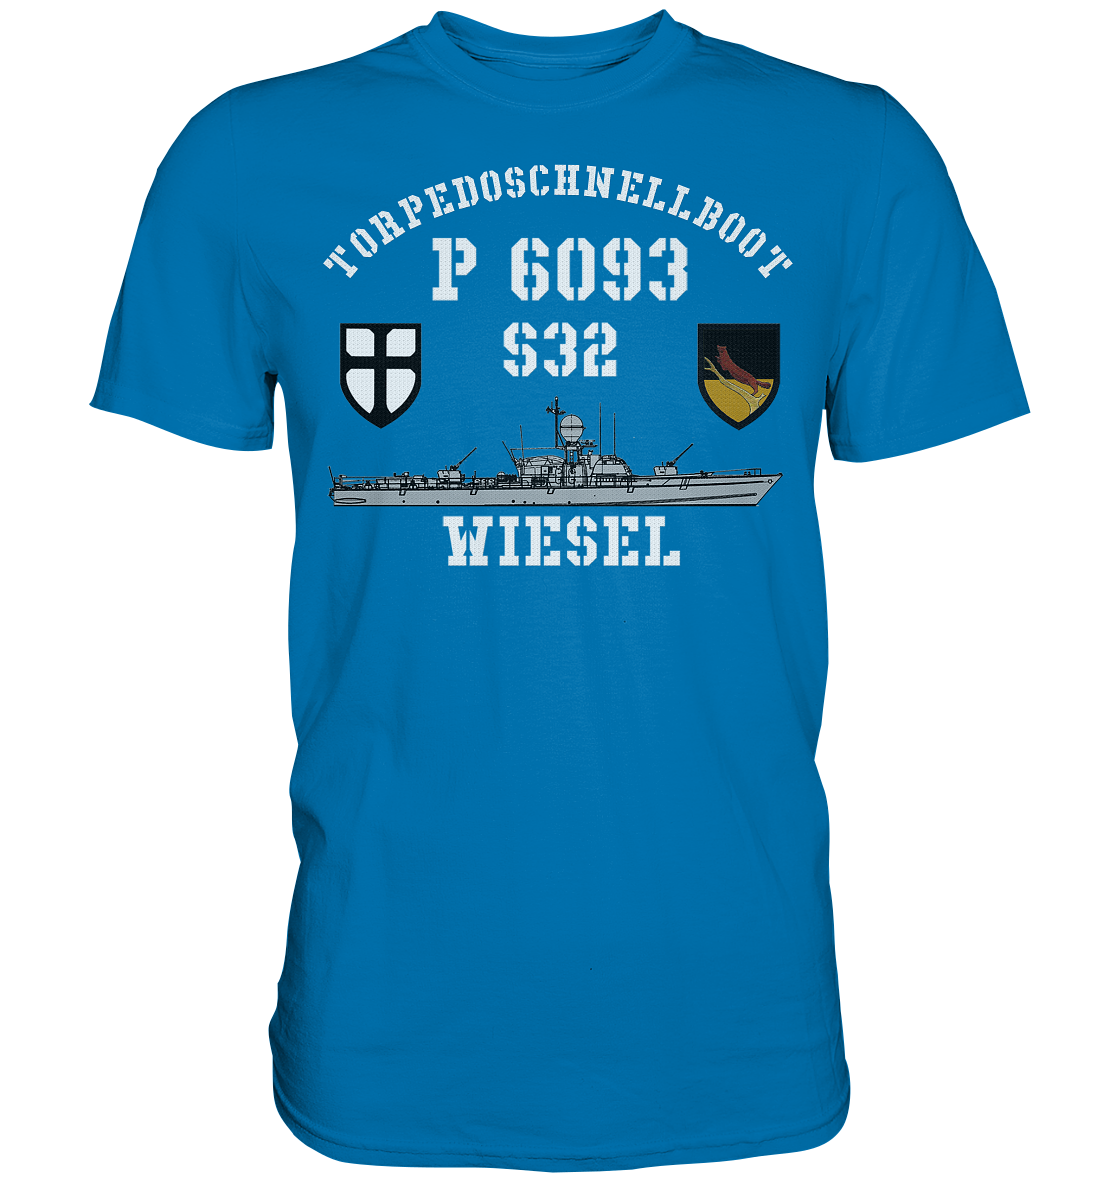 S32 WIESEL - Premium Shirt